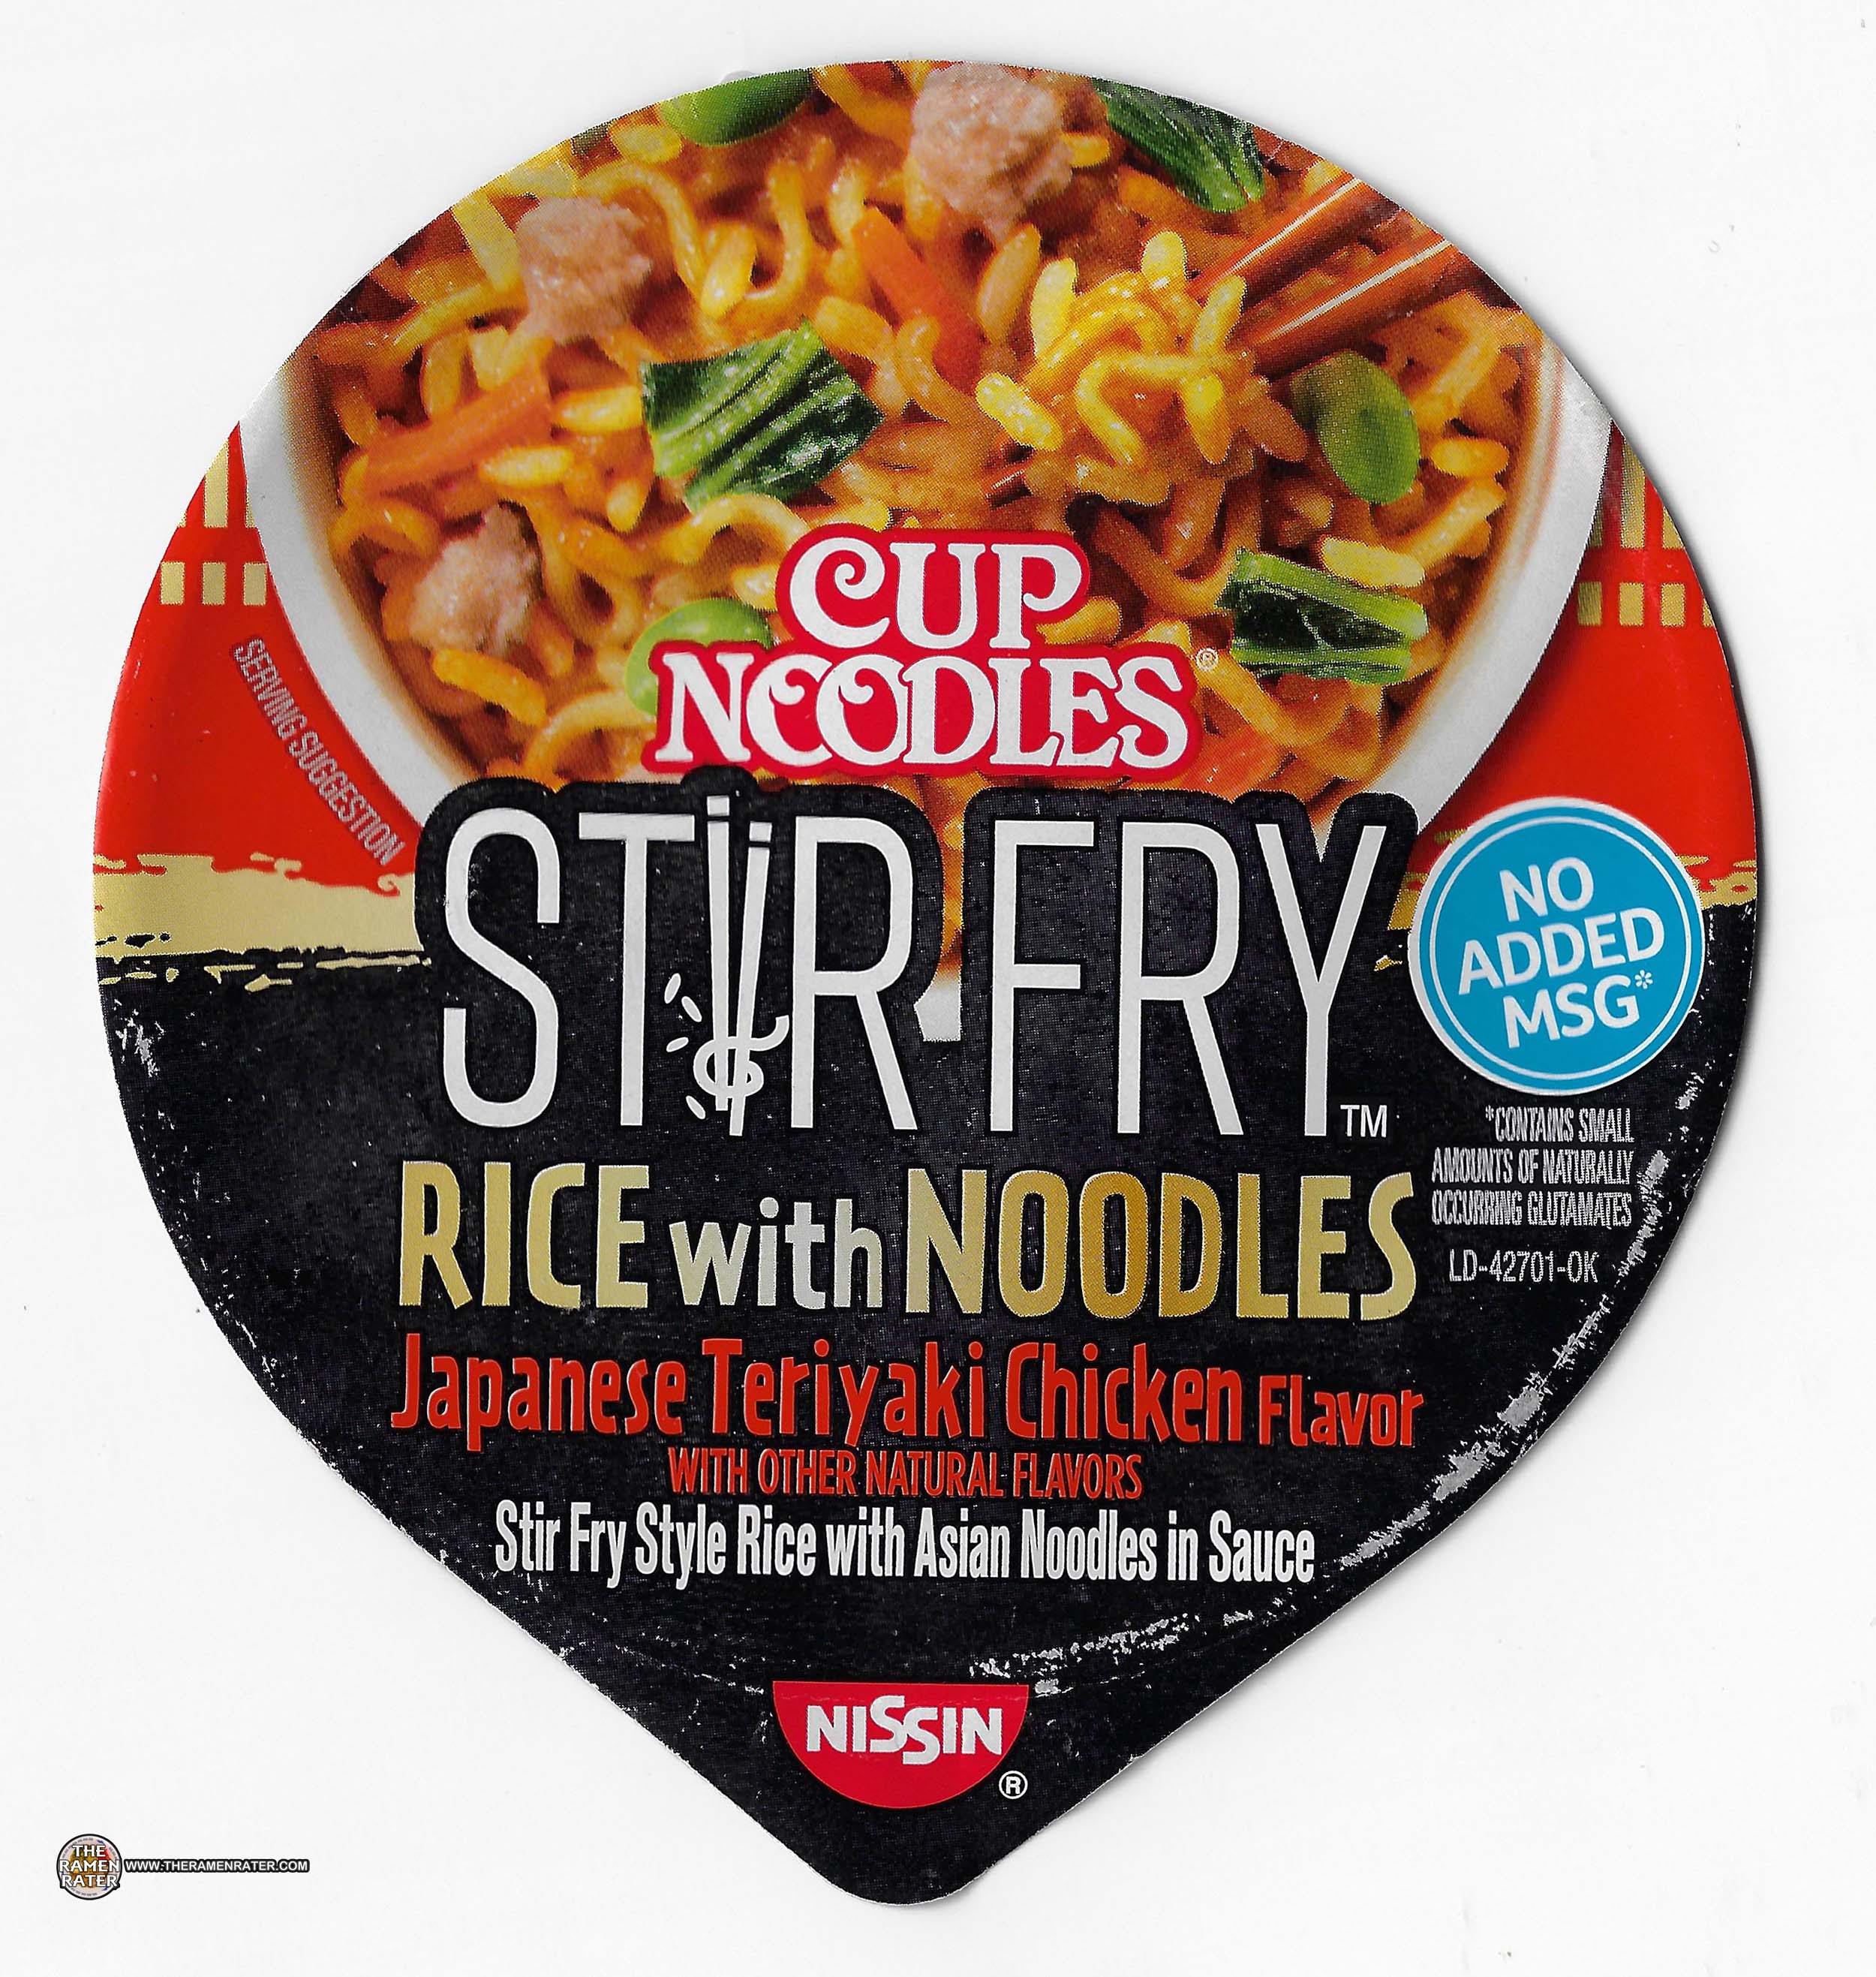 4153: Nissin Cup Noodles Stir Fry Rice w/Noodles Teriyaki Chicken